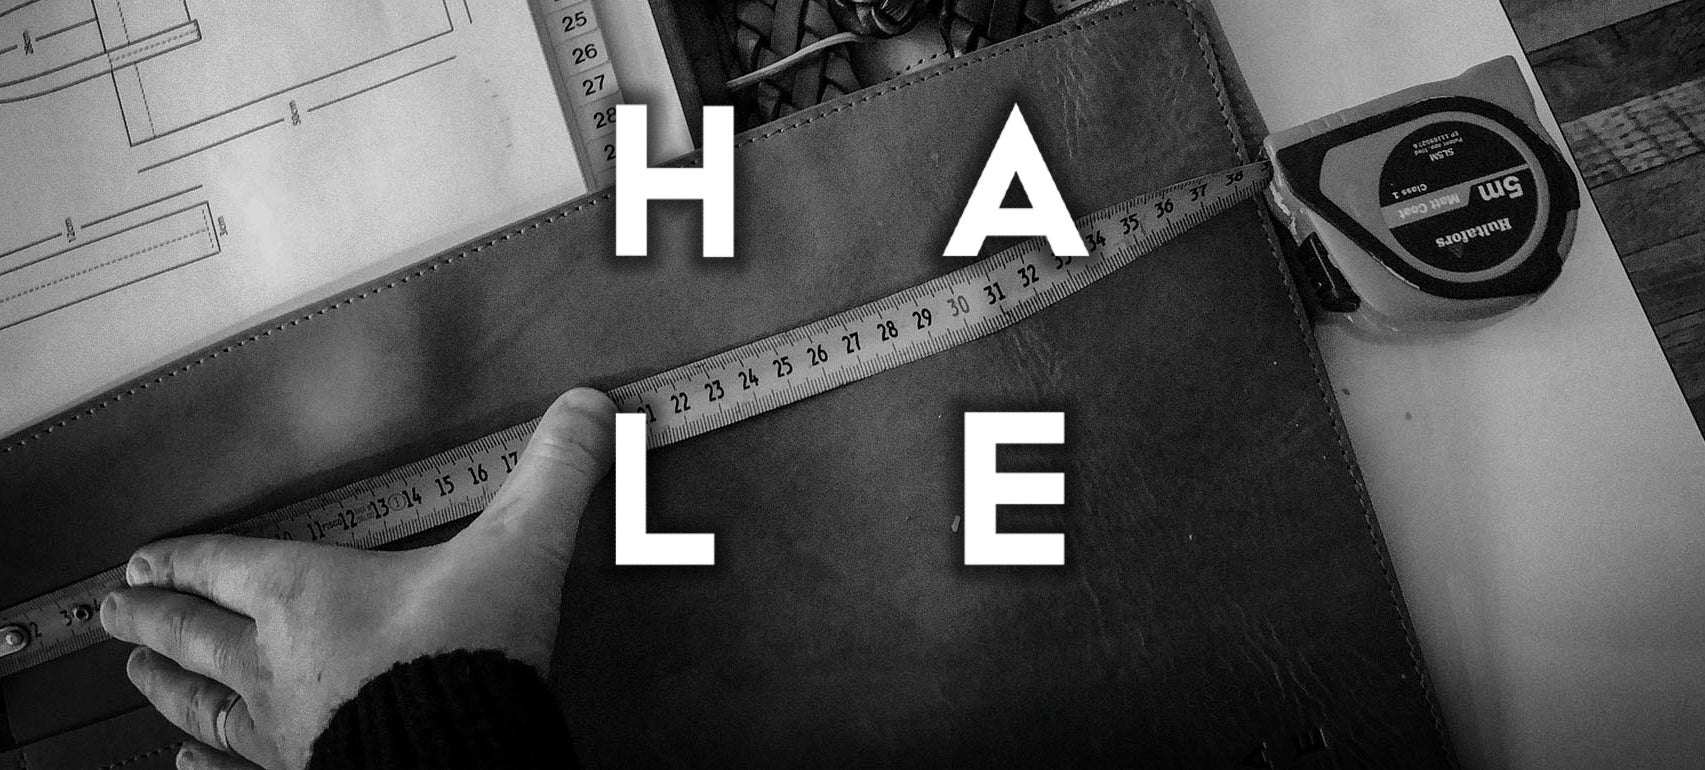 Load video: halland-leather